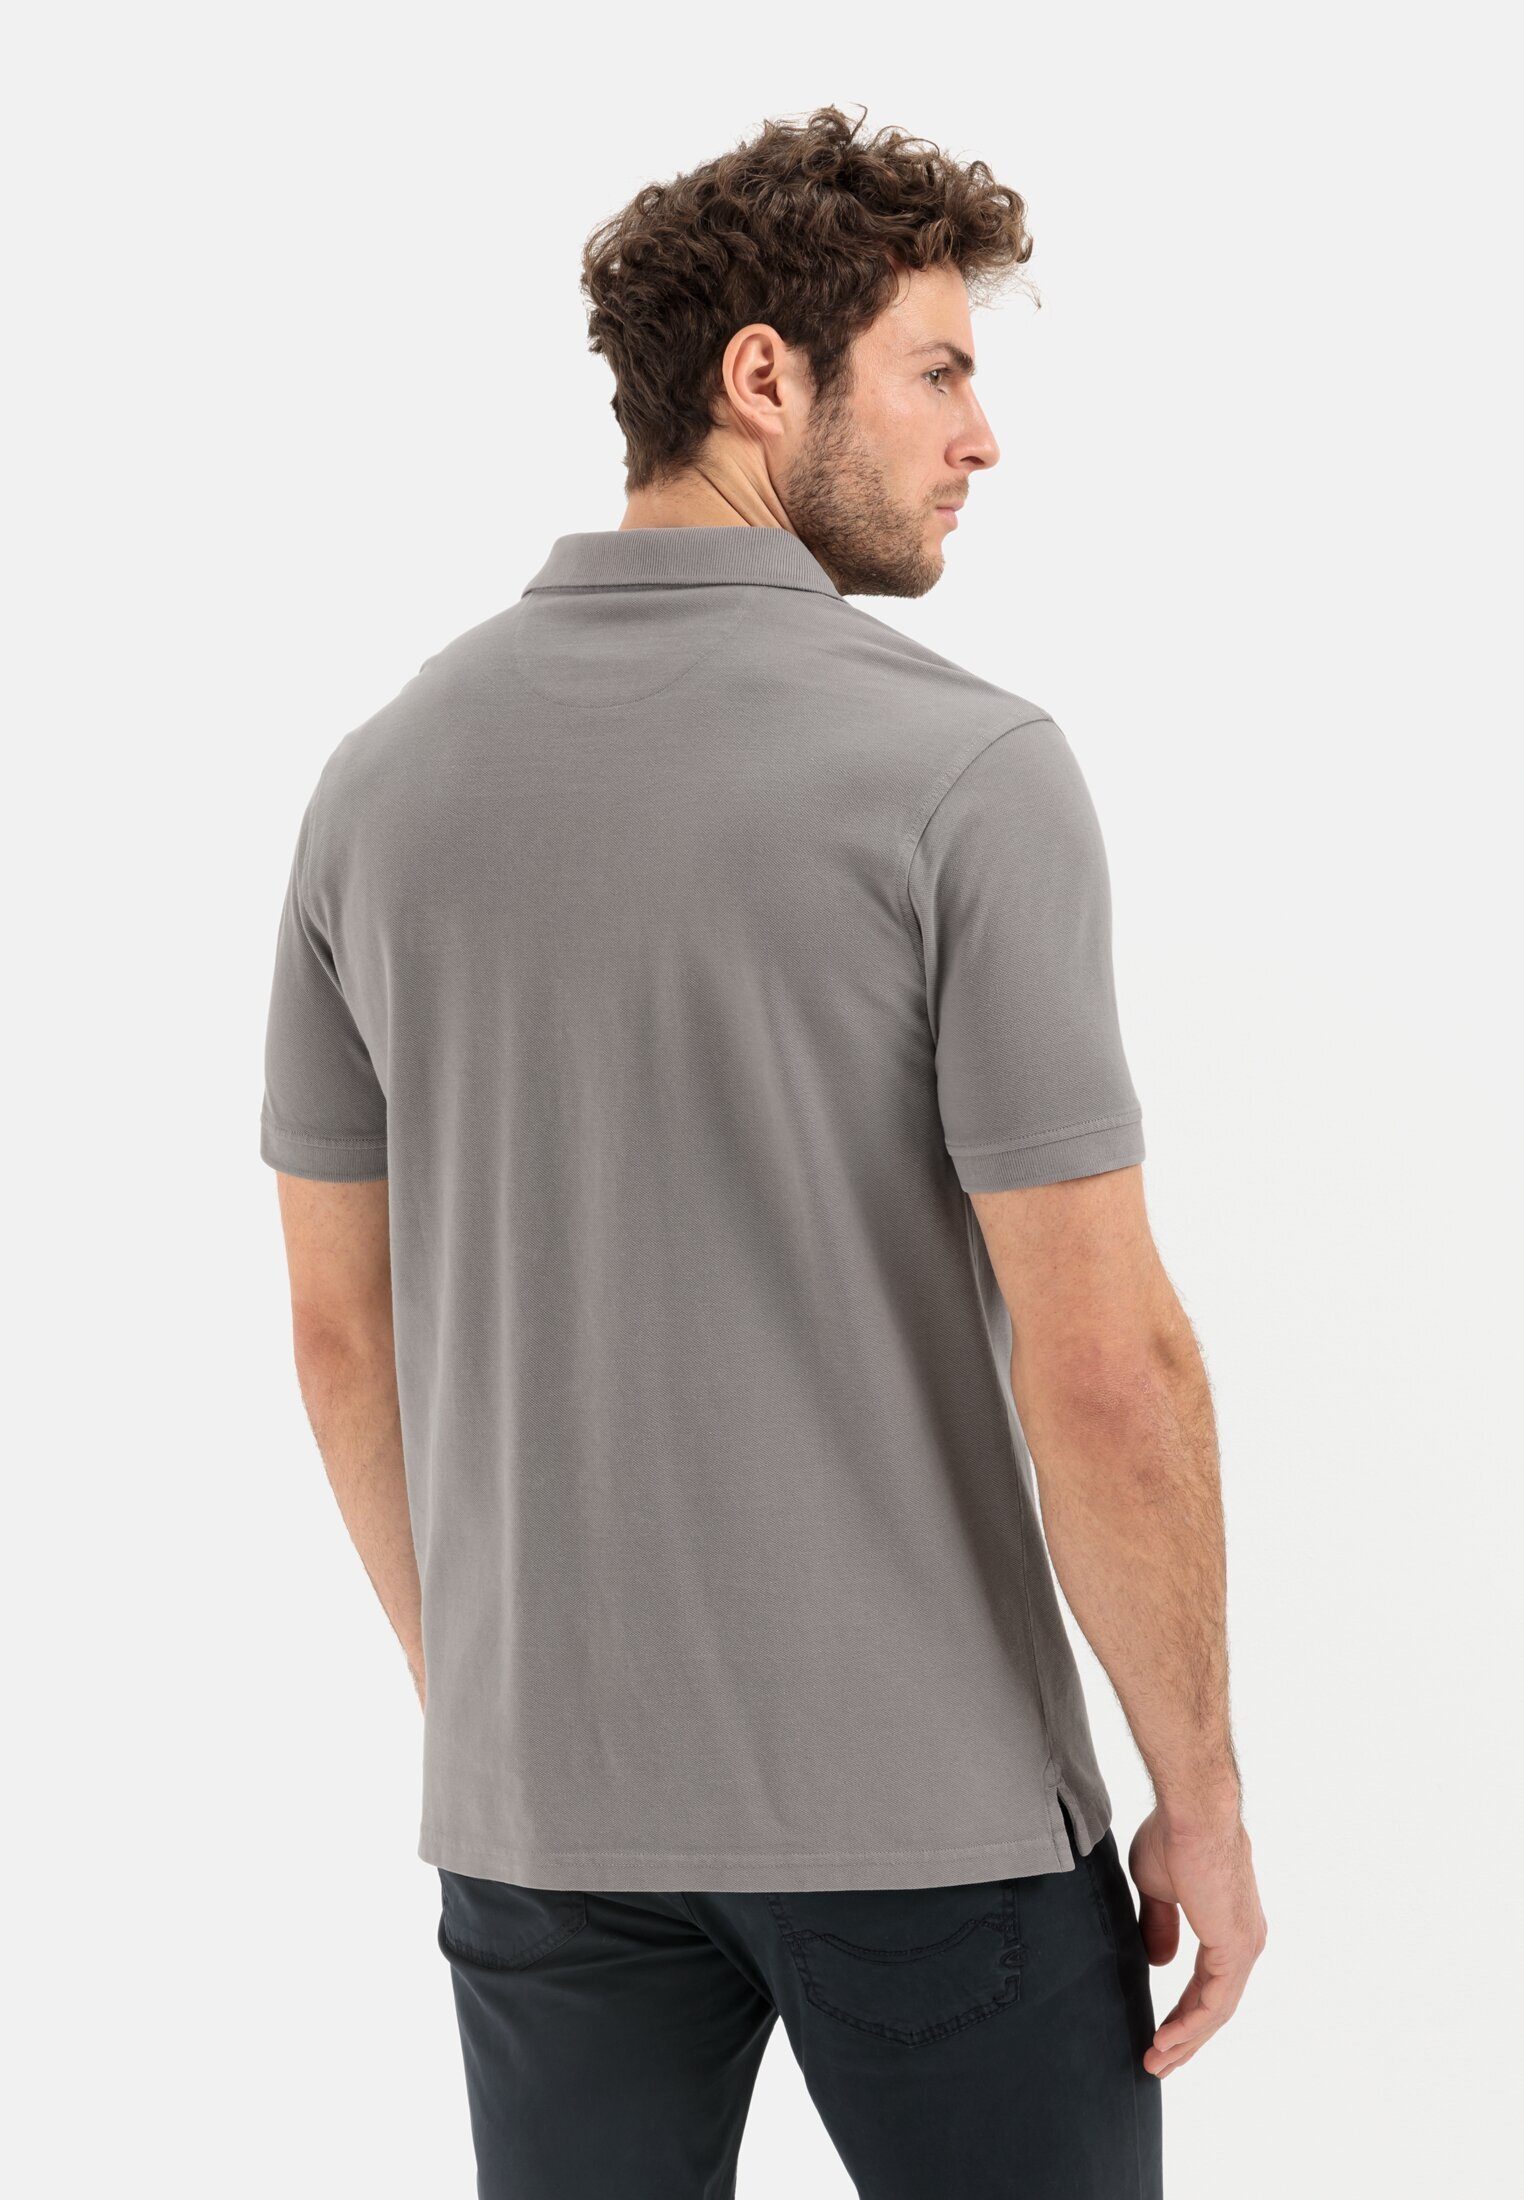 Grau active aus reiner Baumwolle Poloshirt Shirts_Poloshirt camel